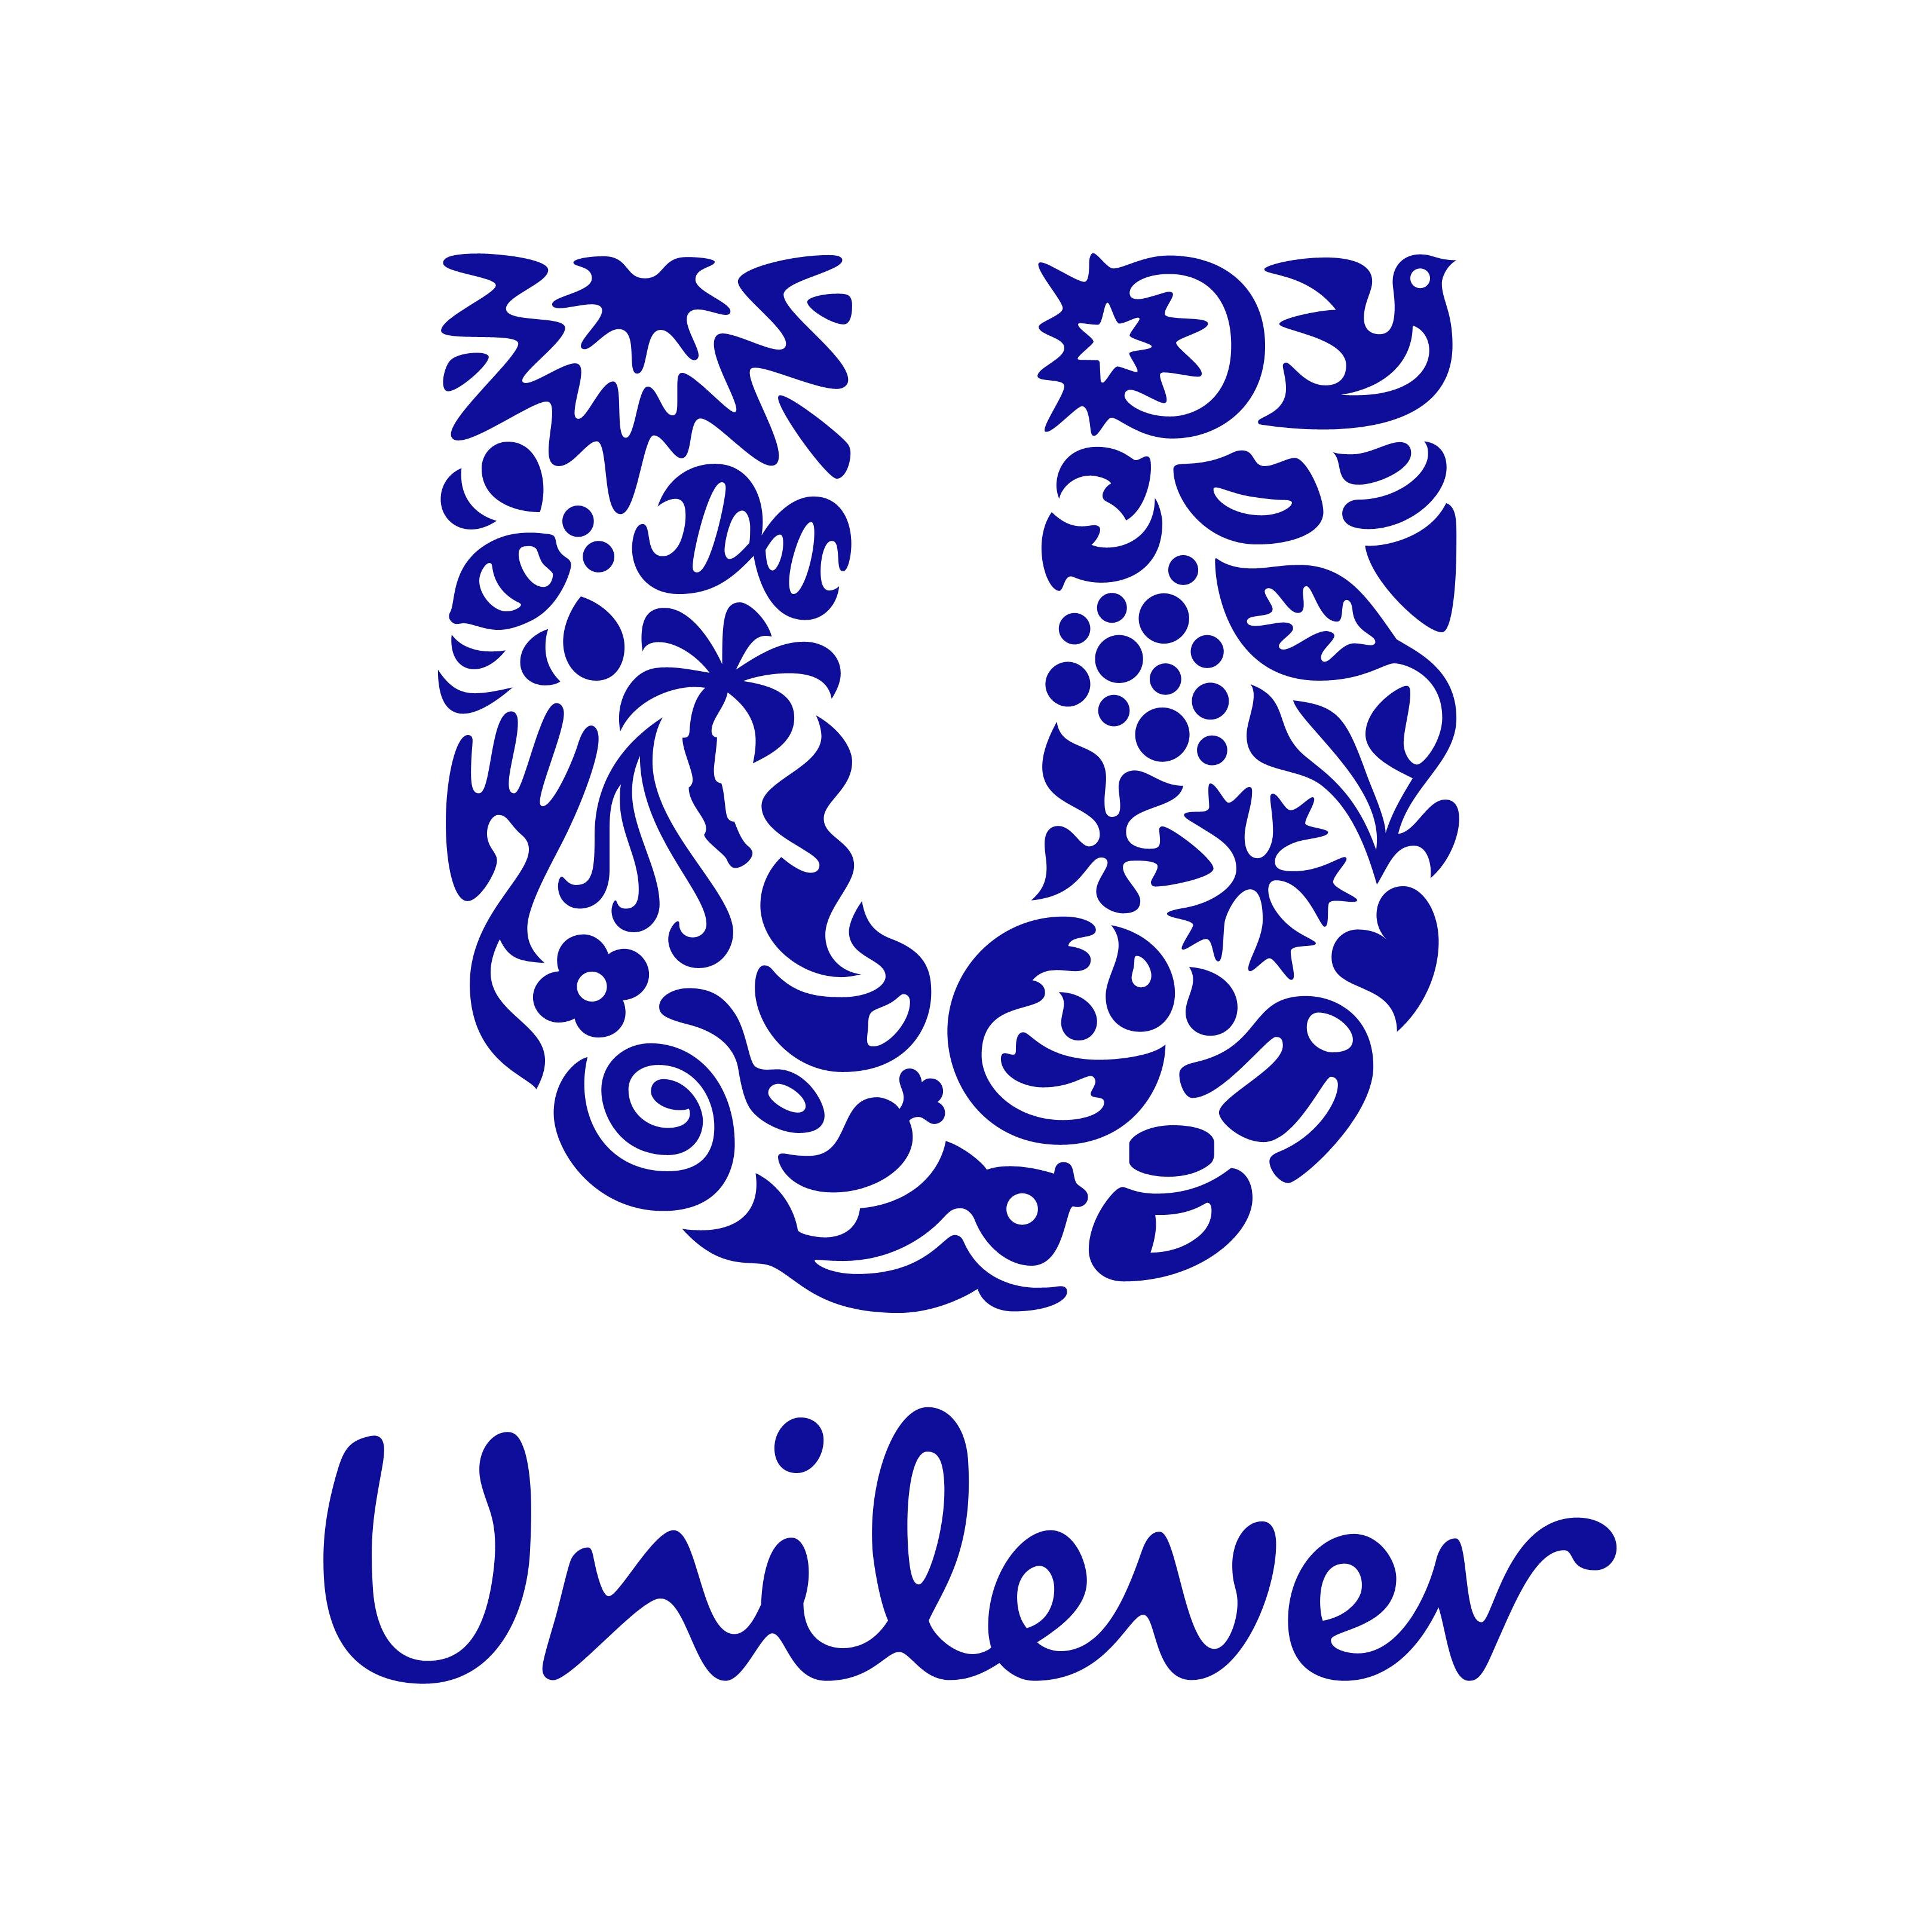 Factory Jobs @ Unilever (Brands such as Ben & Jerry's, Dove, Klondike etc)